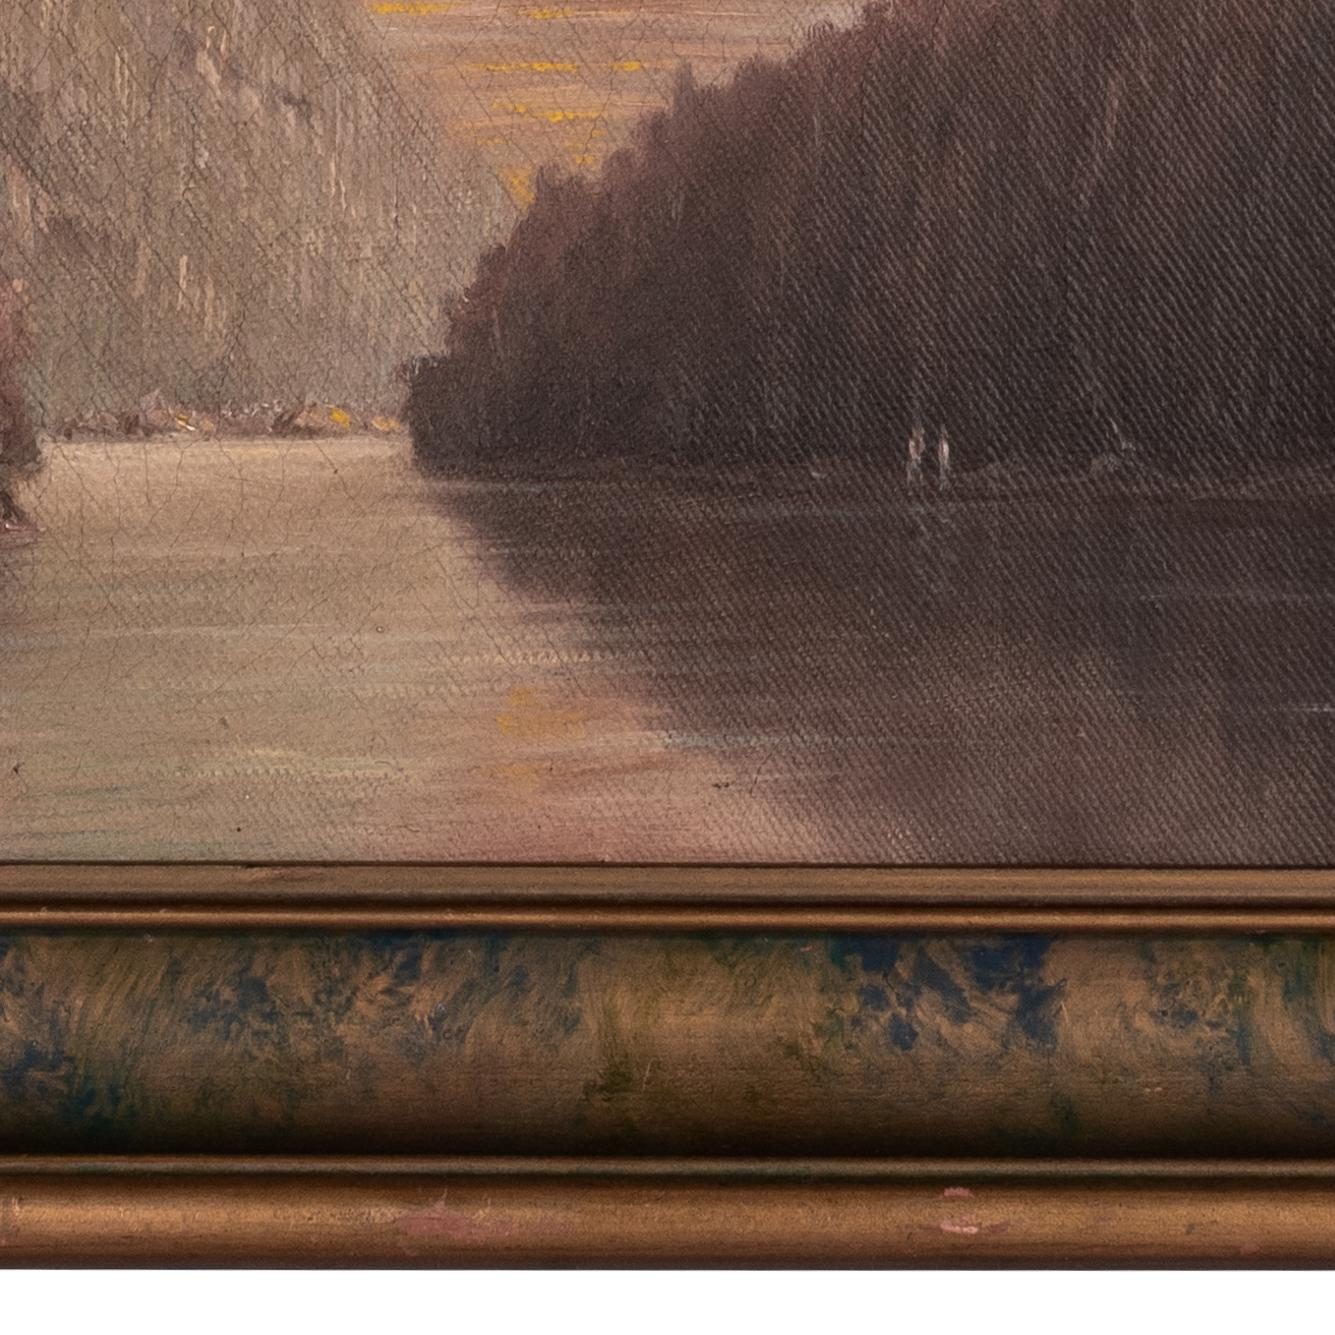 Antique American 19th C Realist California River Landscape Oil on Canvas 1888 For Sale 7